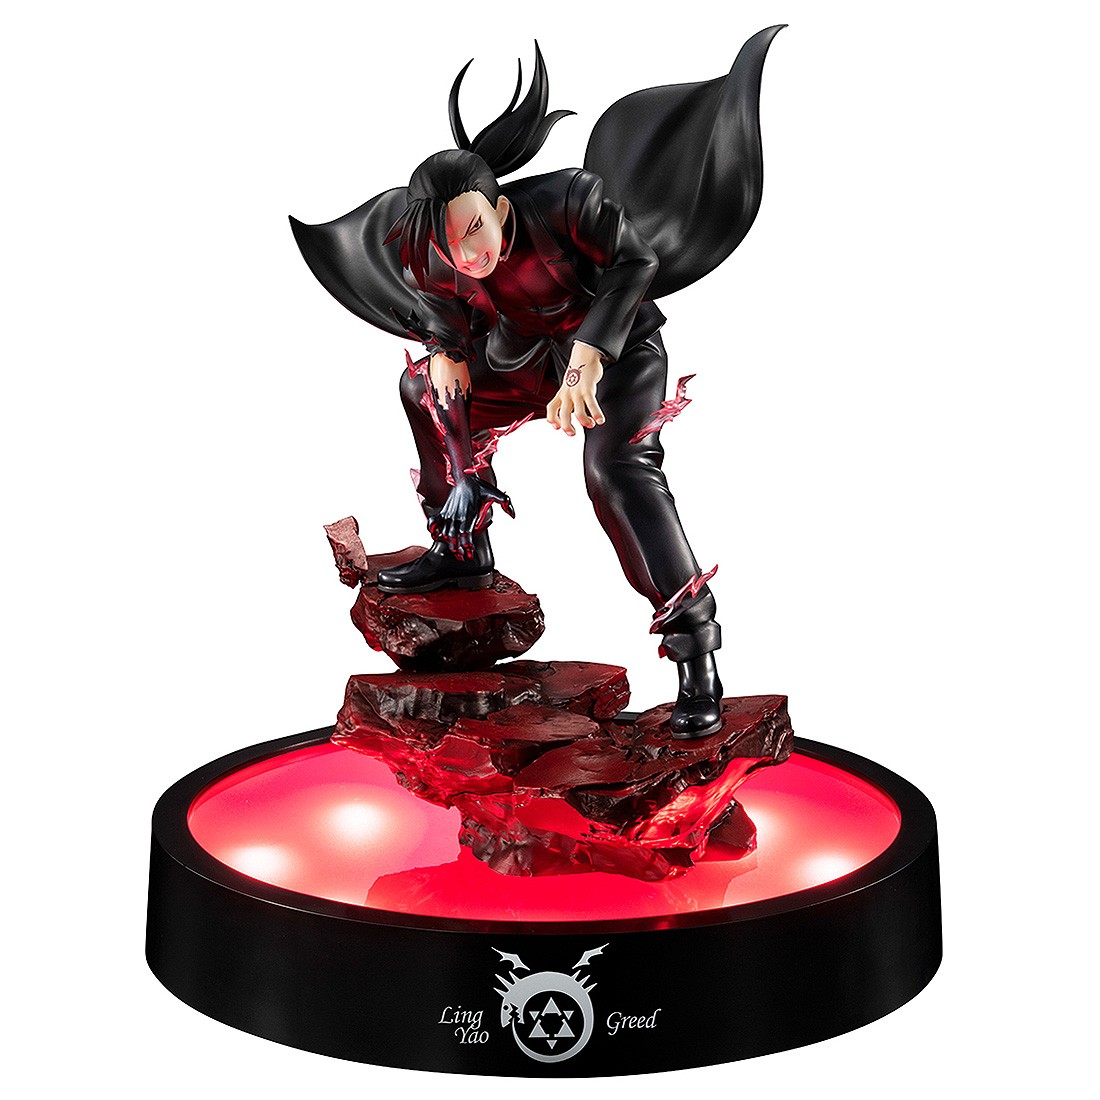 MegaHouse Fullmetal Alchemist Precious G.E.M. Greed Lin Yao Figure With LED Base Stand (black)